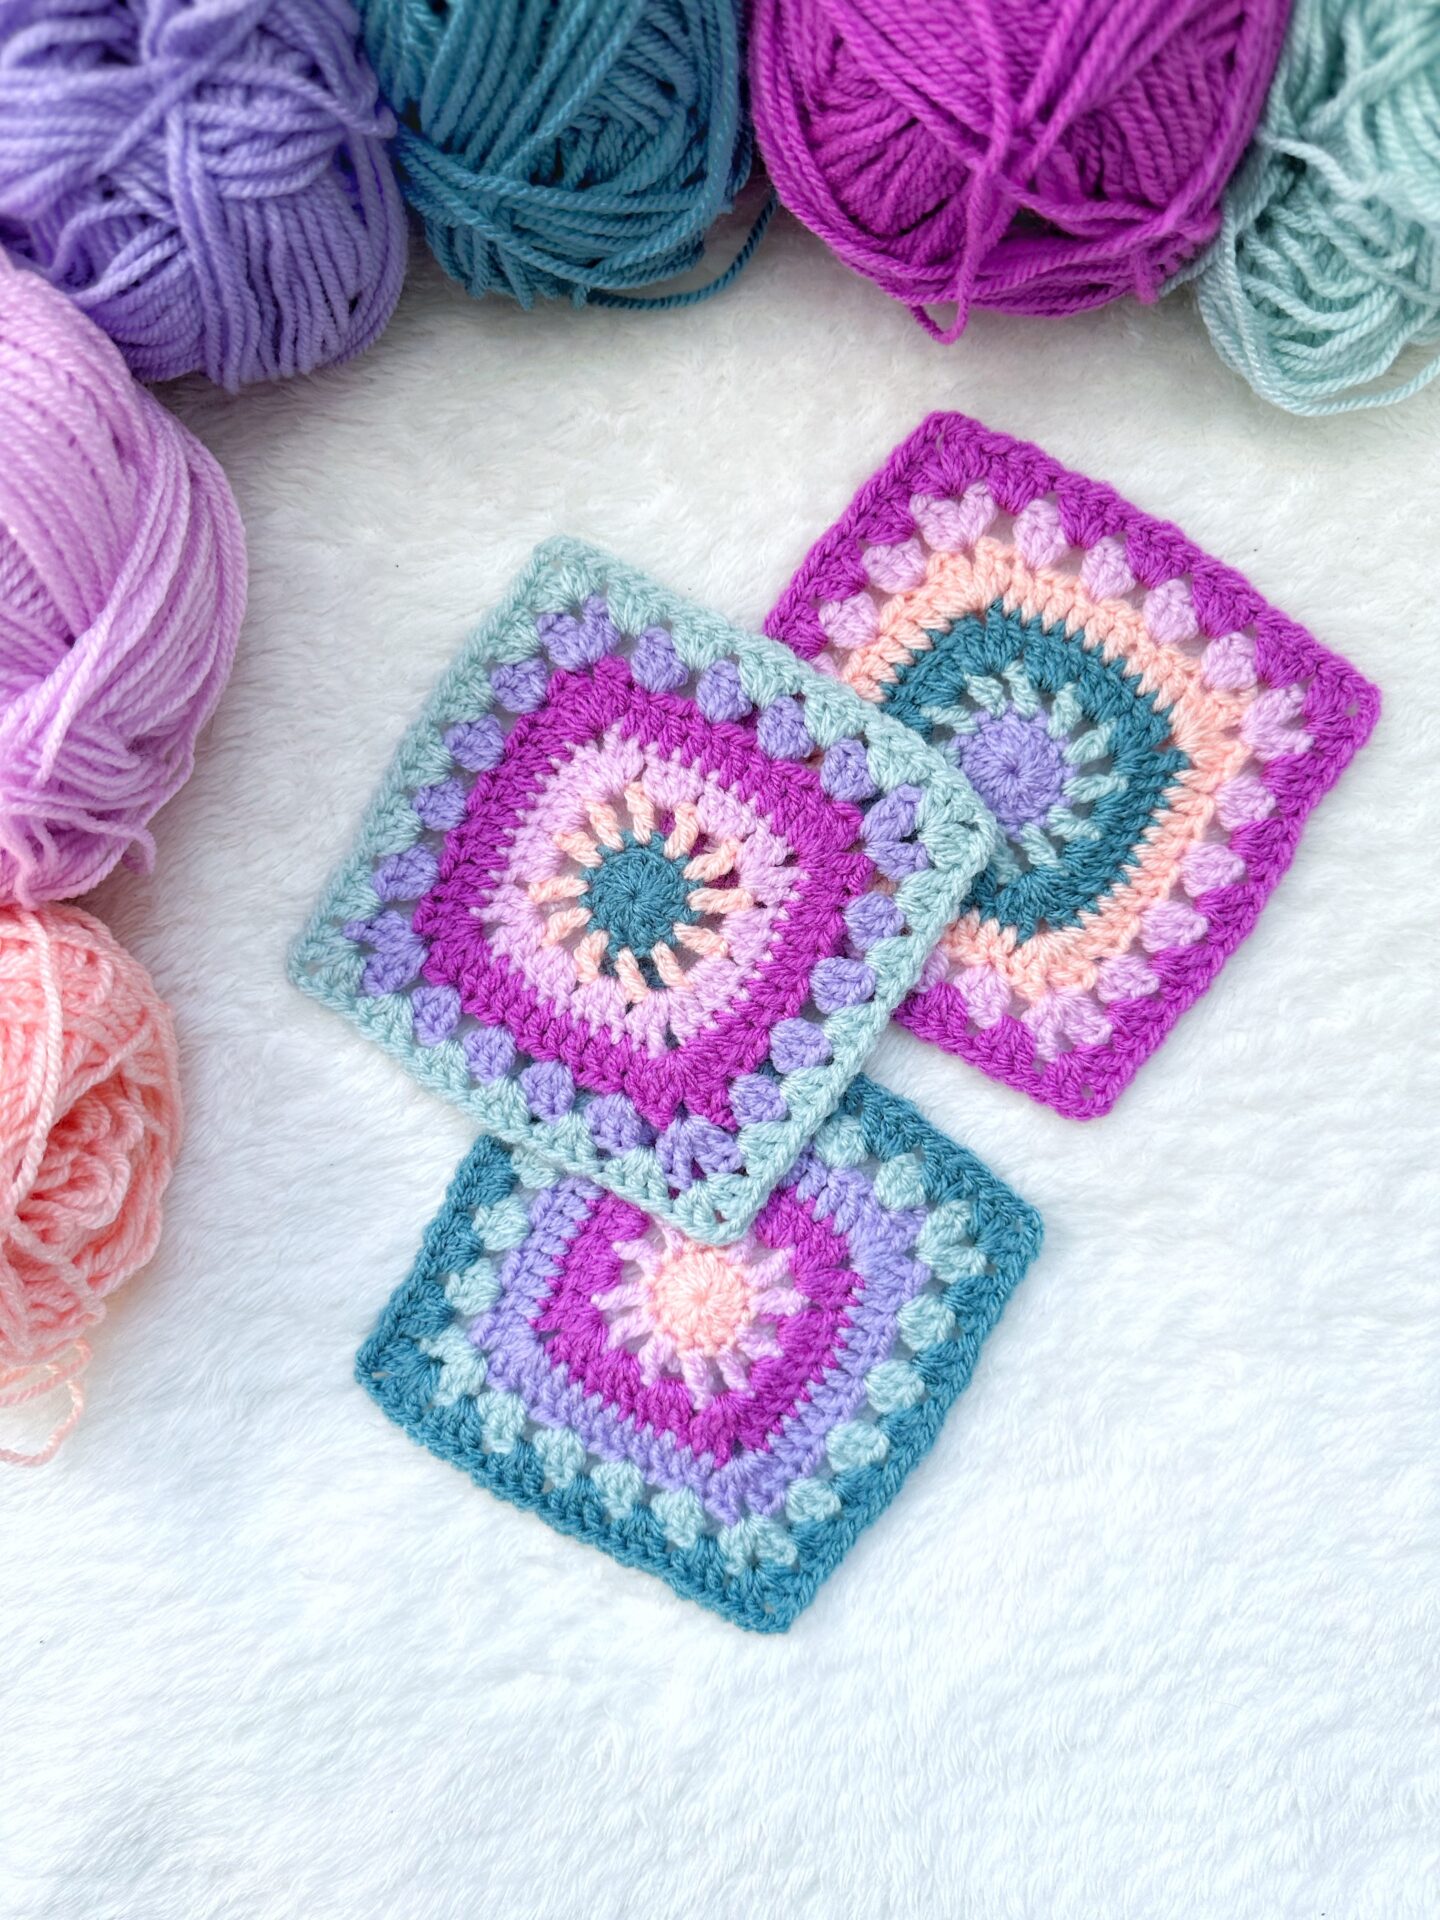 Easy crochet granny square pattern